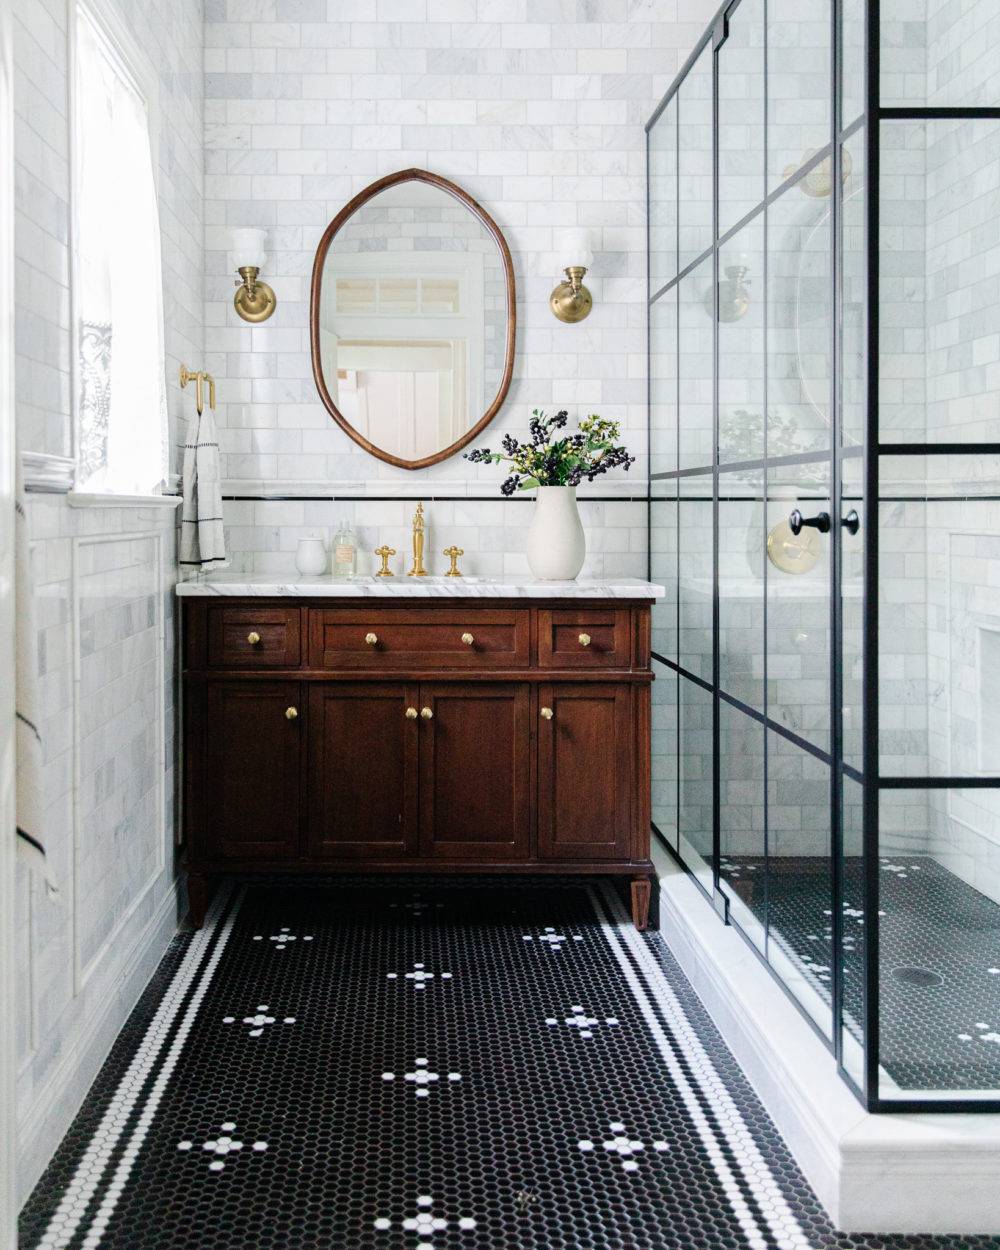 Marble tiled bathroom featuring black and white penny round custom floor pattern and dark wood vanity